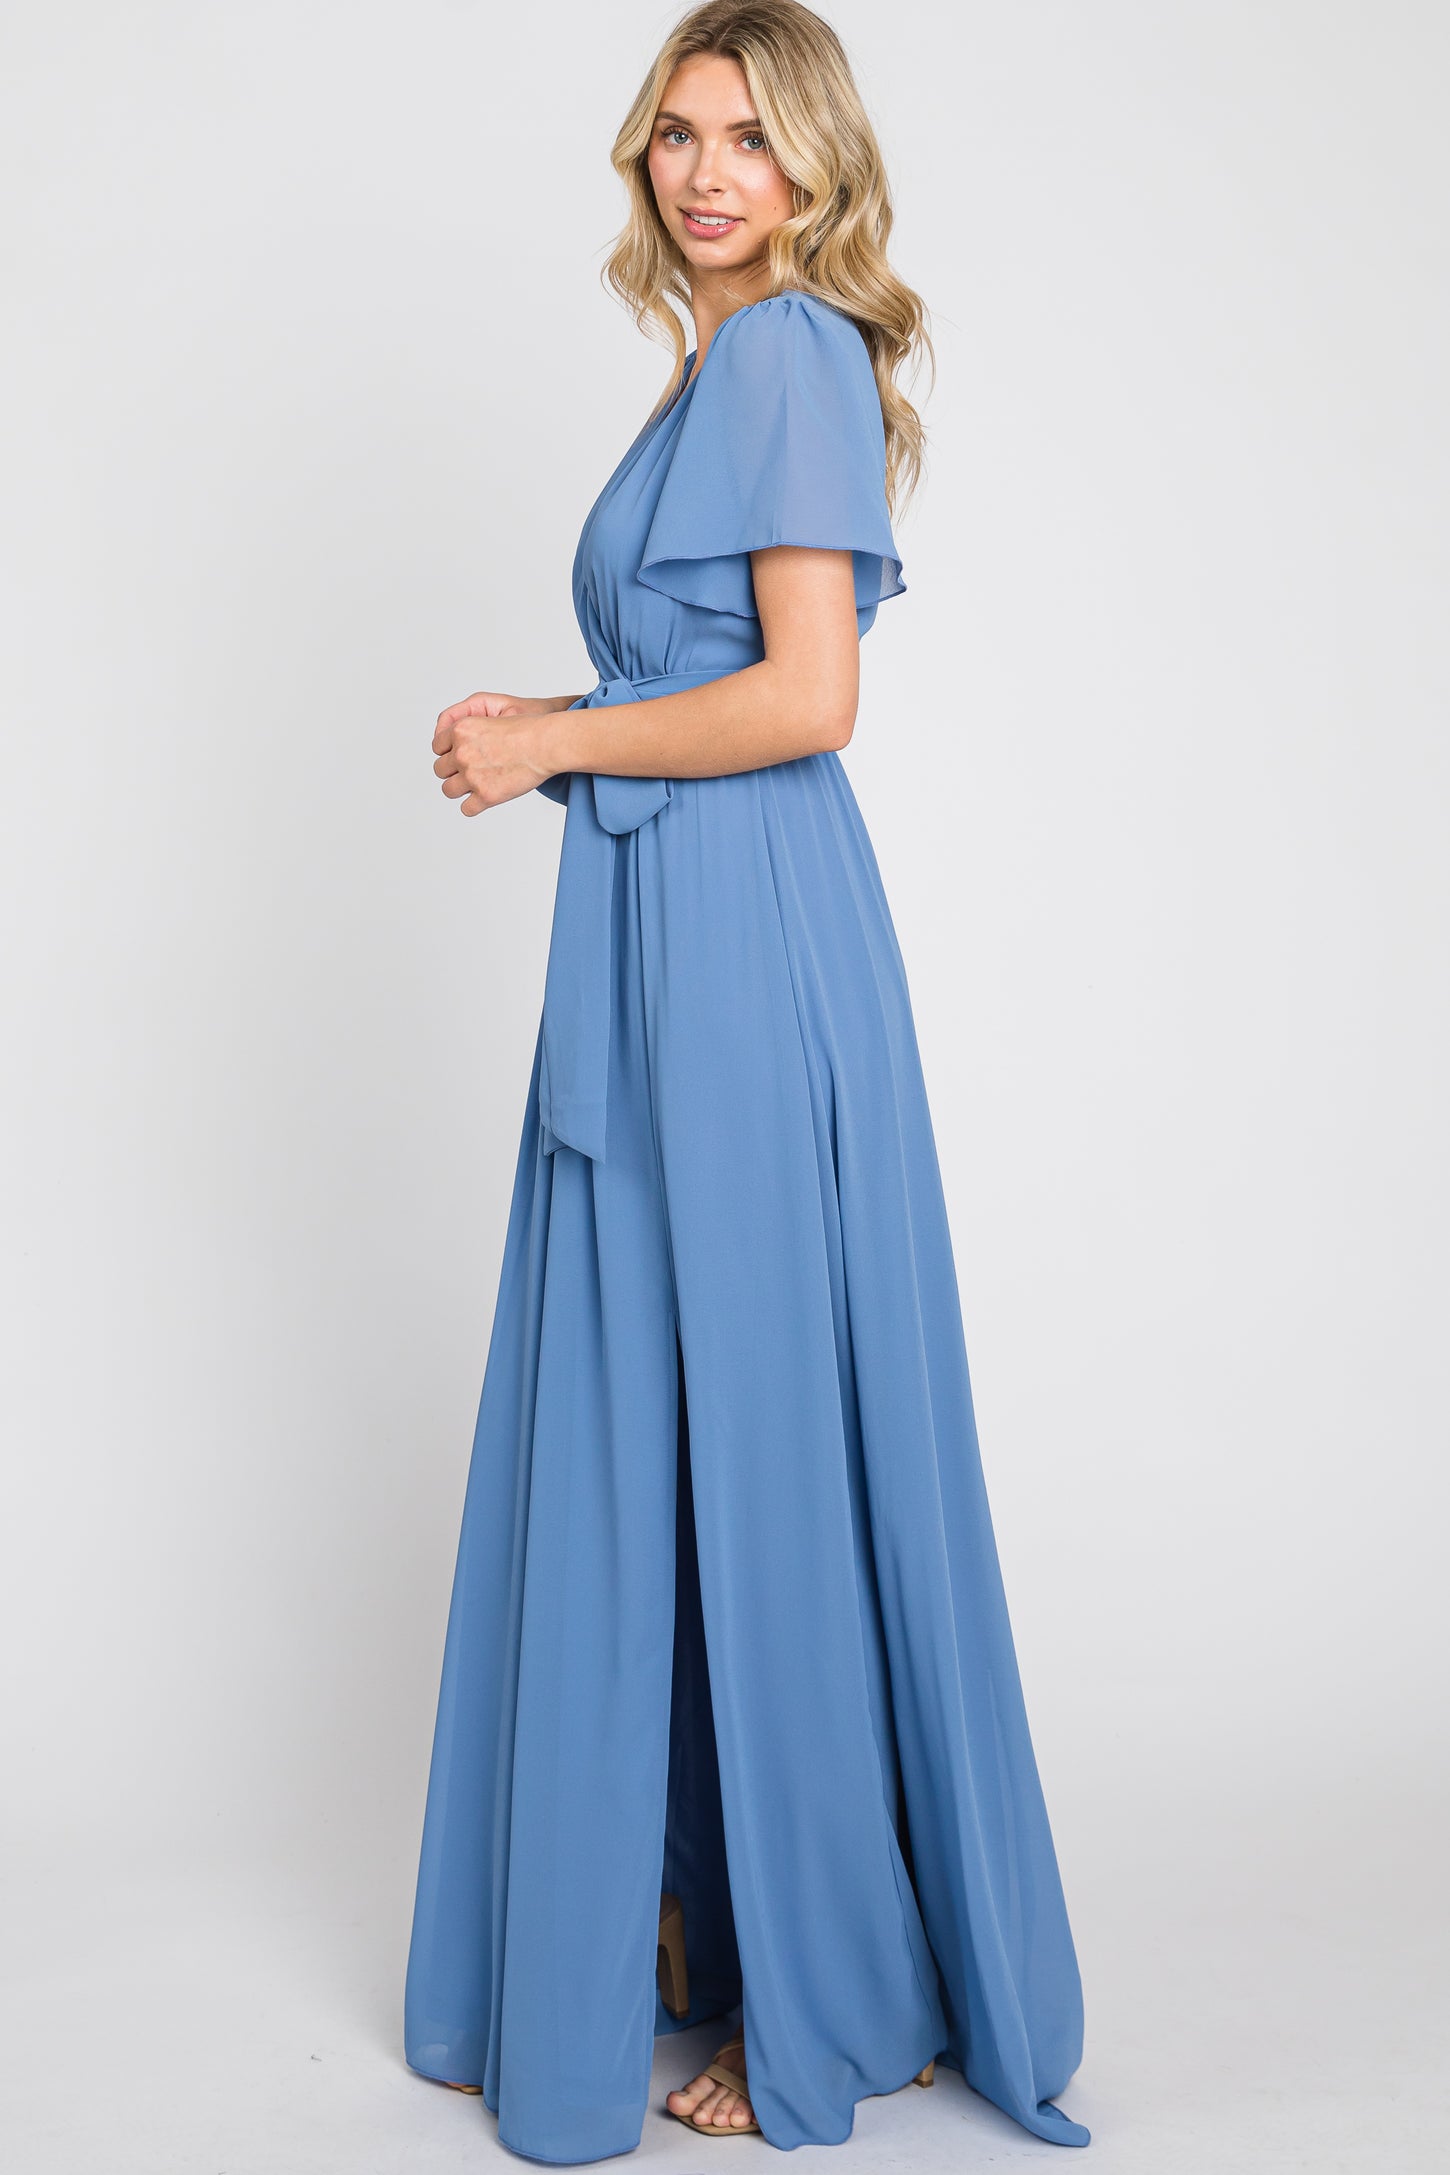 Dusty Blue-Upgrade Maxi Dress - Long Sleeve Dress - V neck Dress